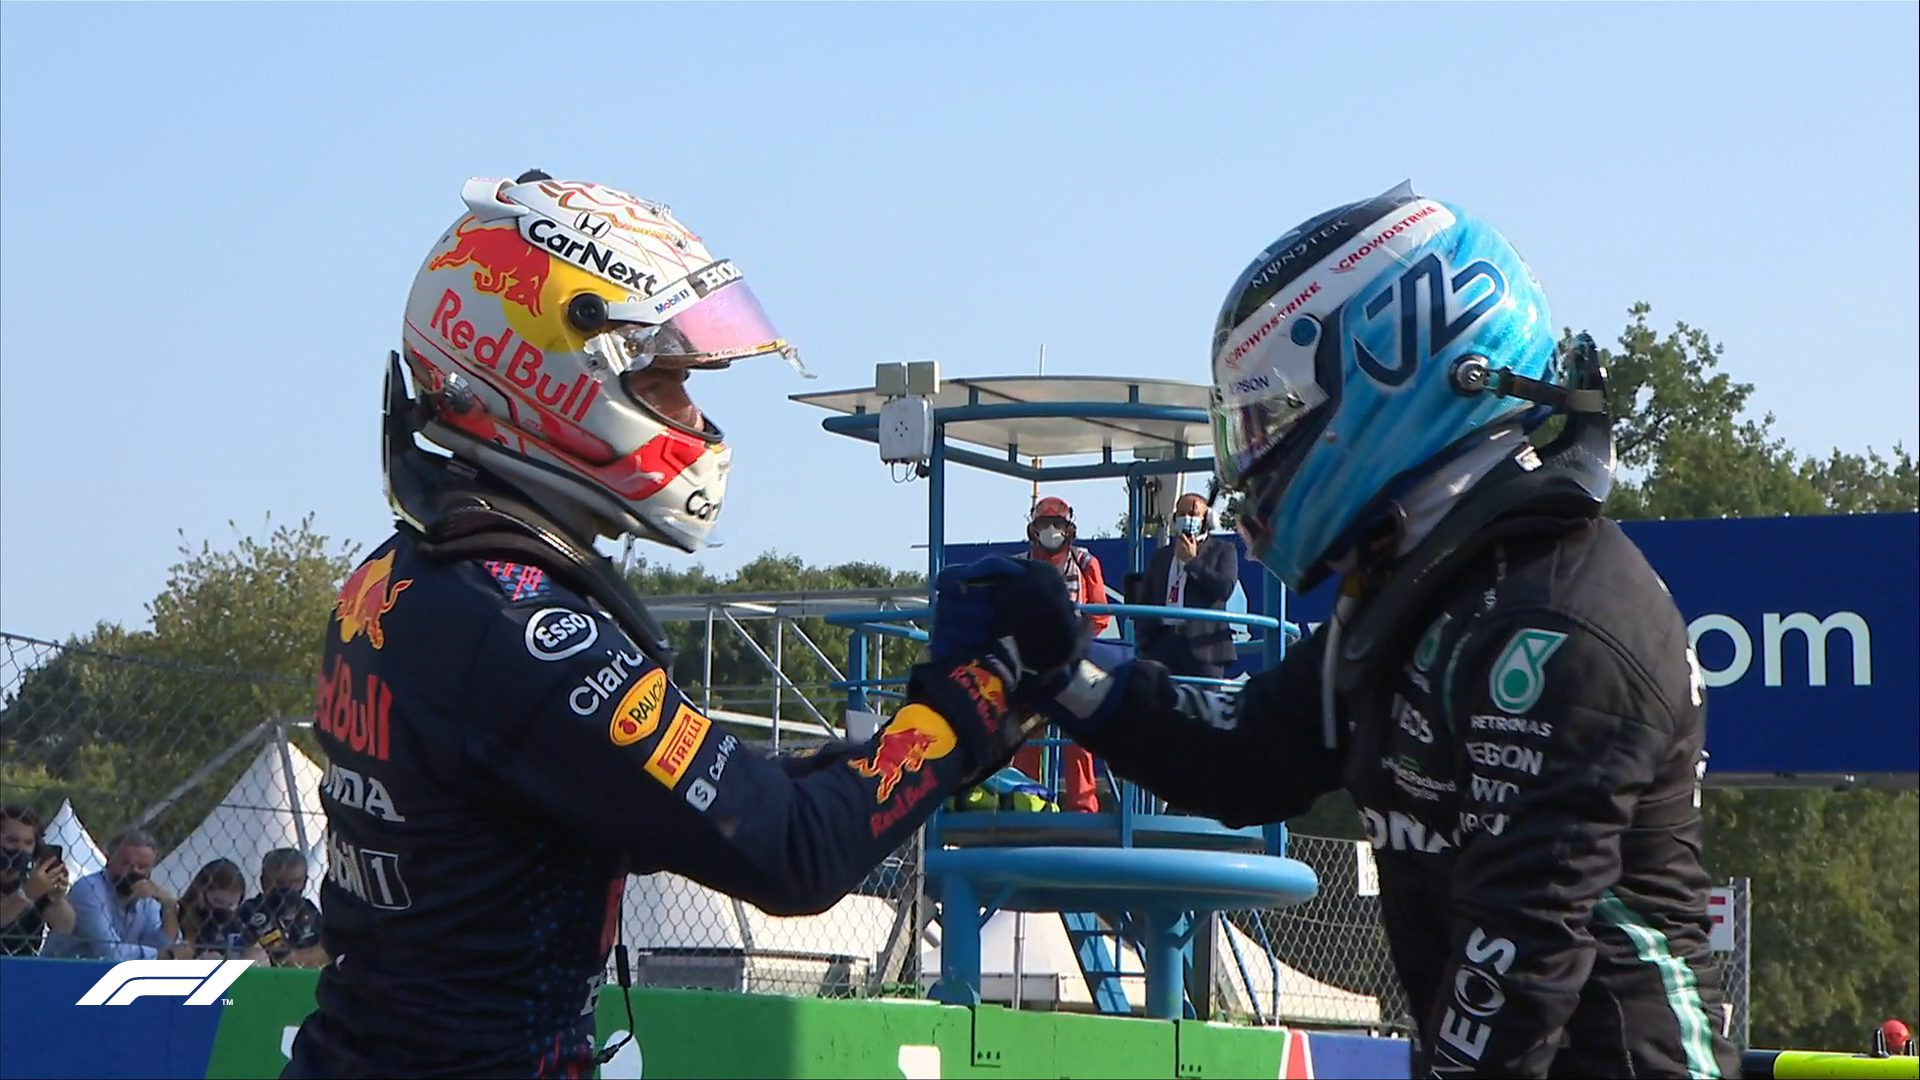 GP Ιταλίας: Νικητής του sprint race ο Bottas, pole όμως για Verstappen!